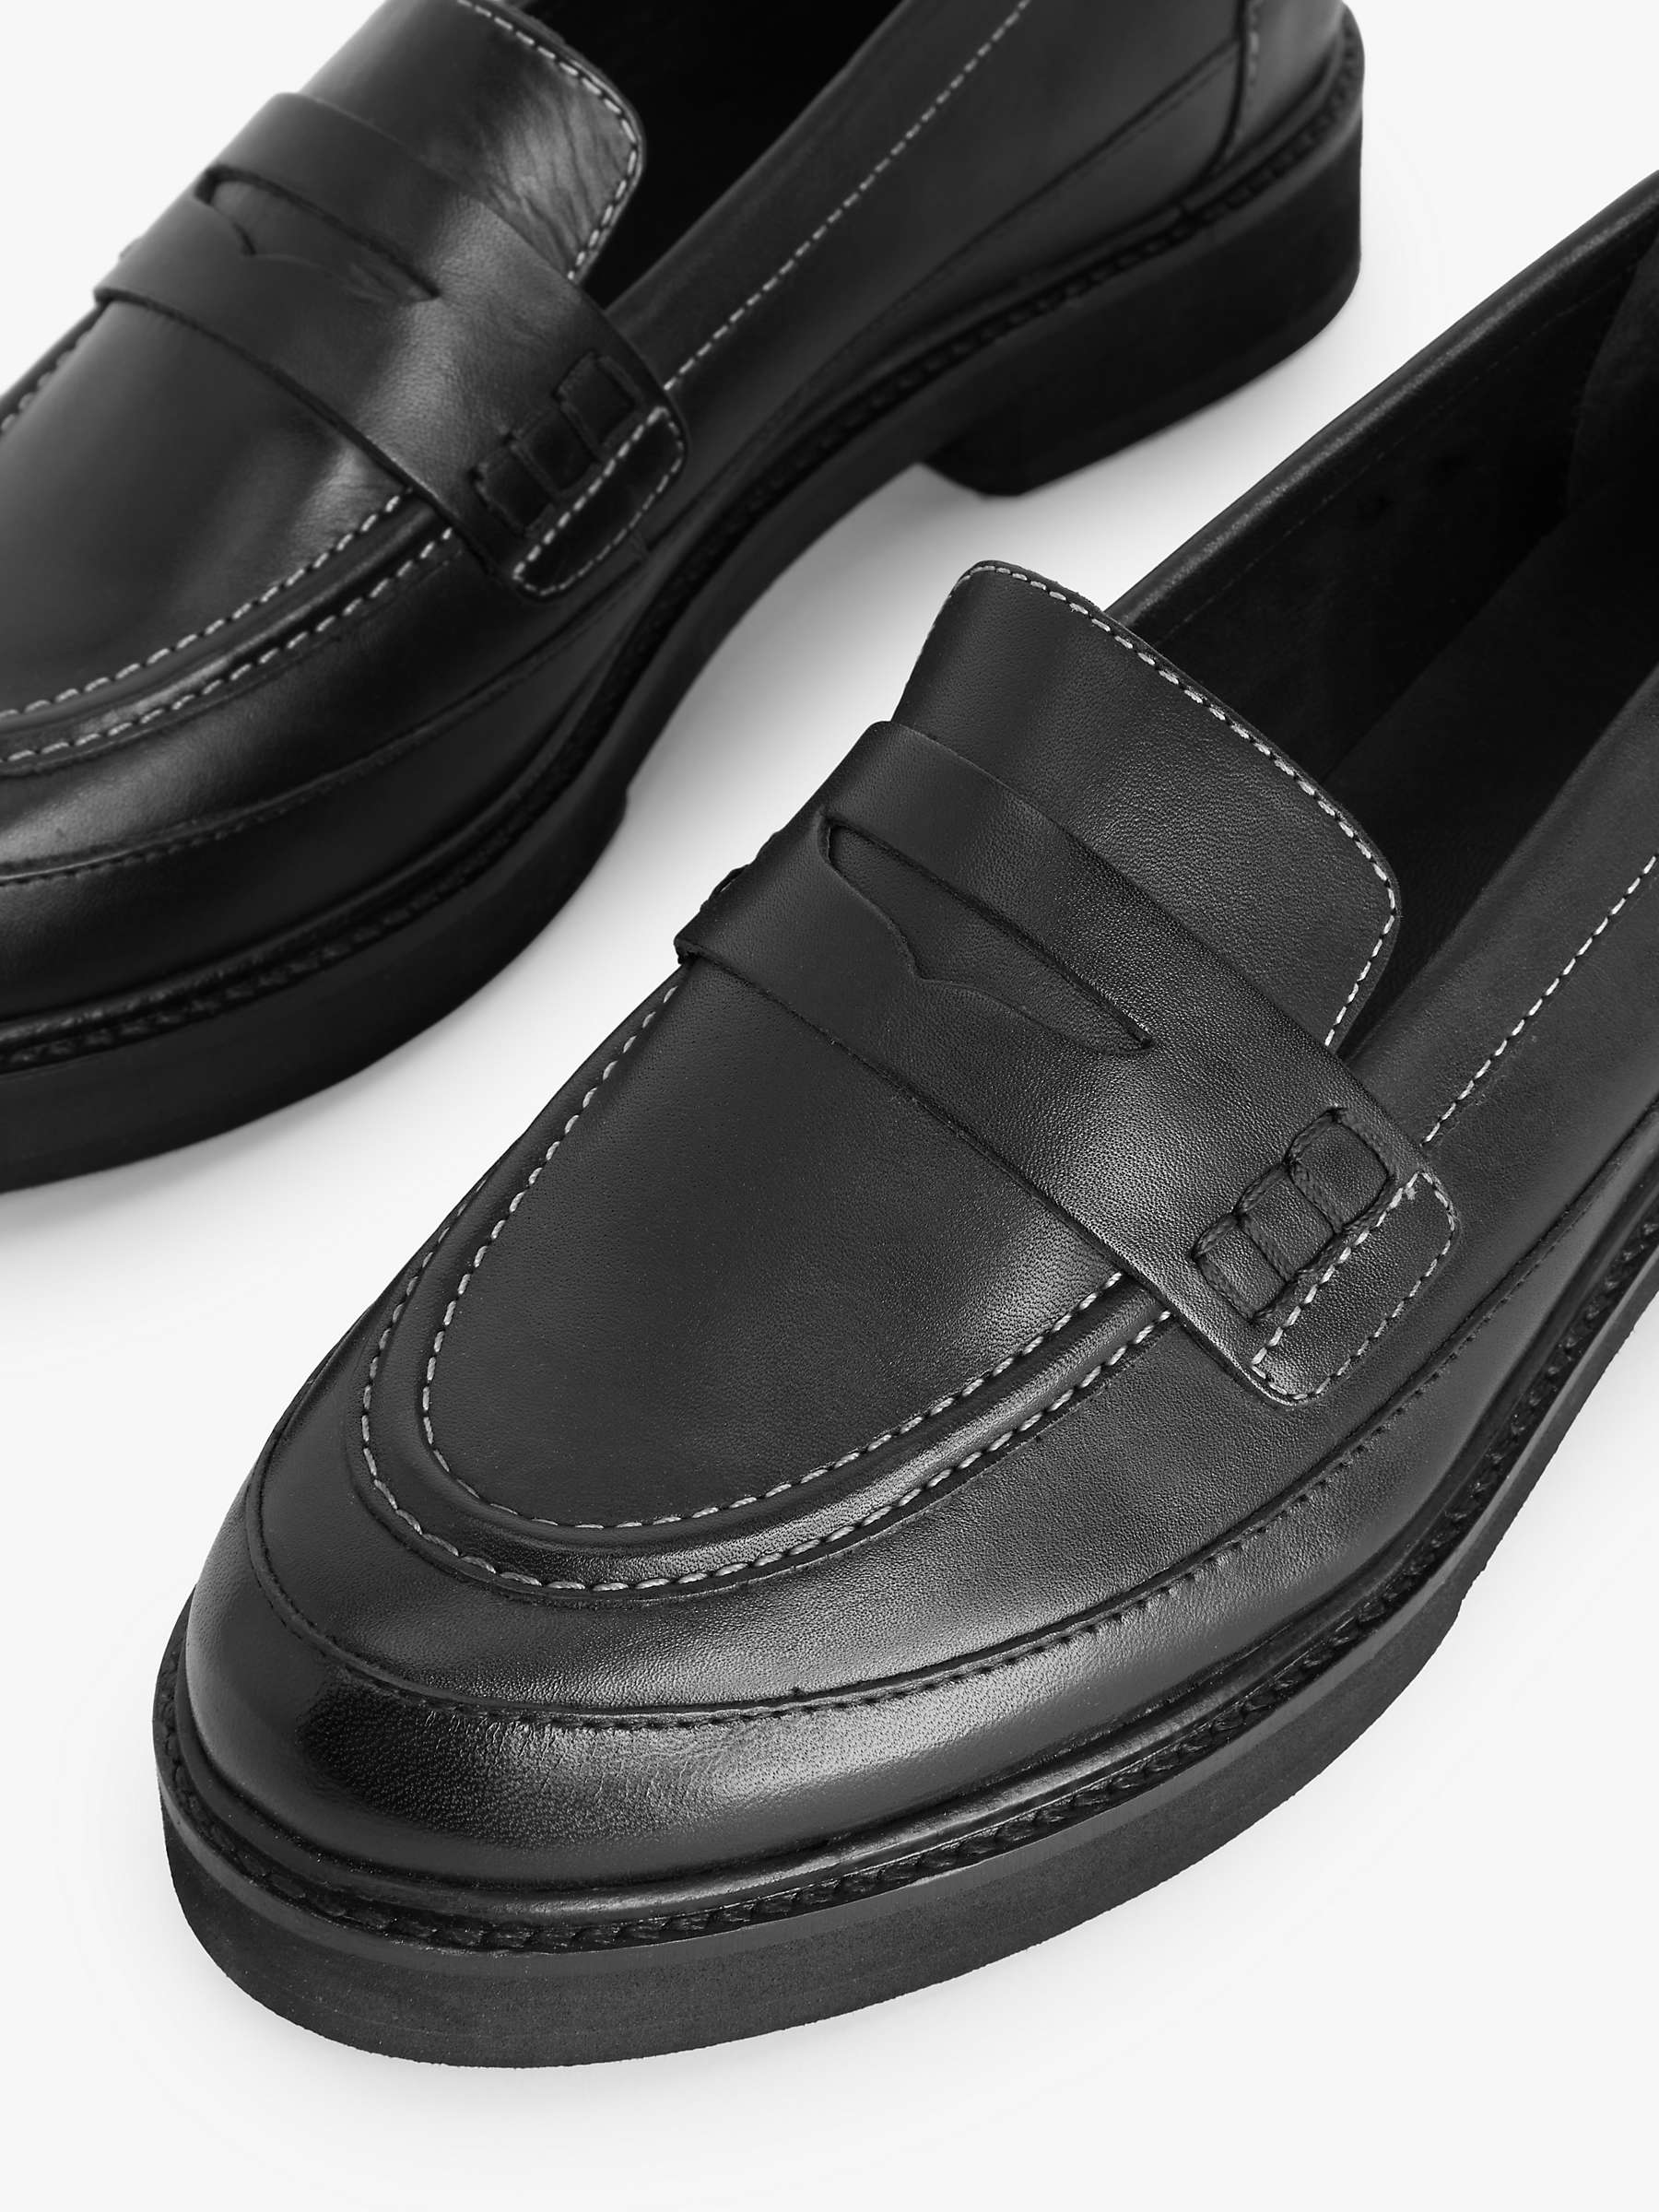 Kin Gemini Leather Flatform Loafers, Black at John Lewis & Partners